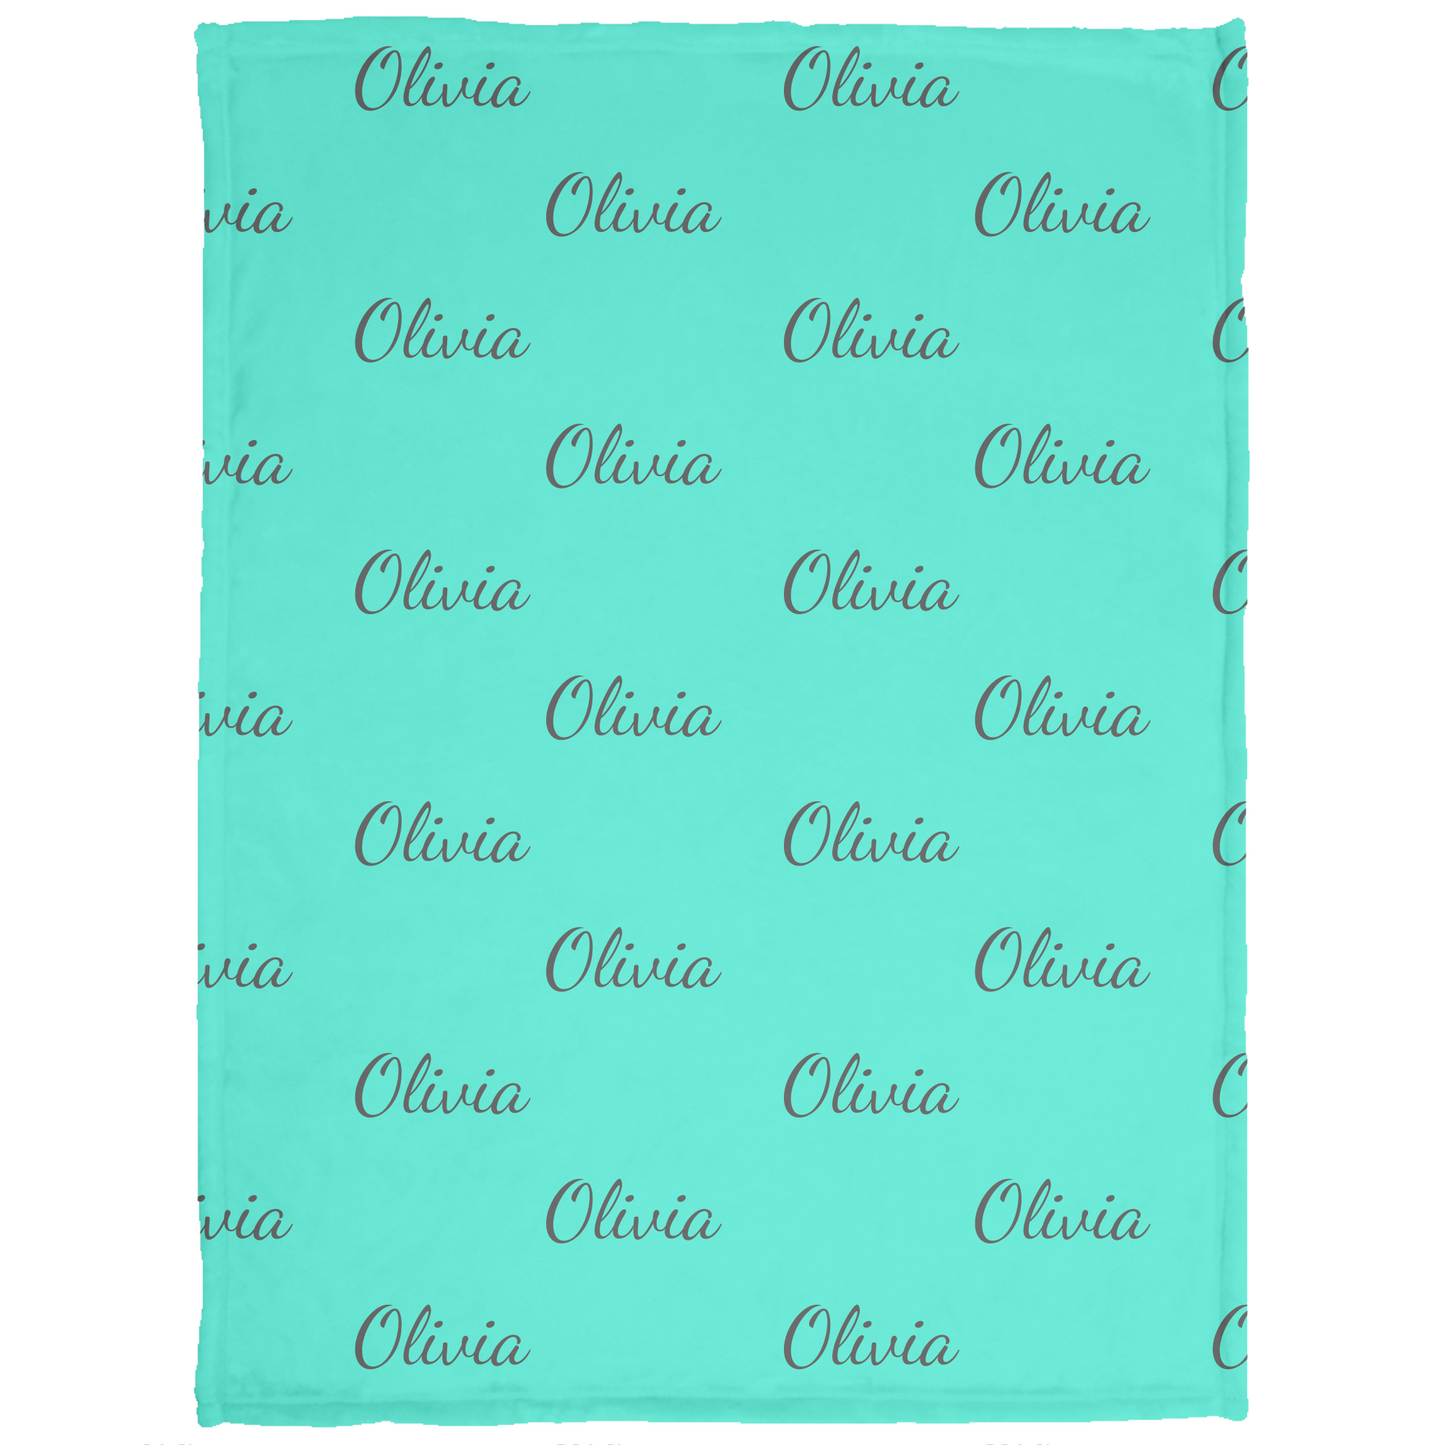 Personalized Custom Blanket | Baby Girl Blanket | Name Blanket |Girl Blanket Gift | Baby Blanket | Personalized Gift | Custom Gift